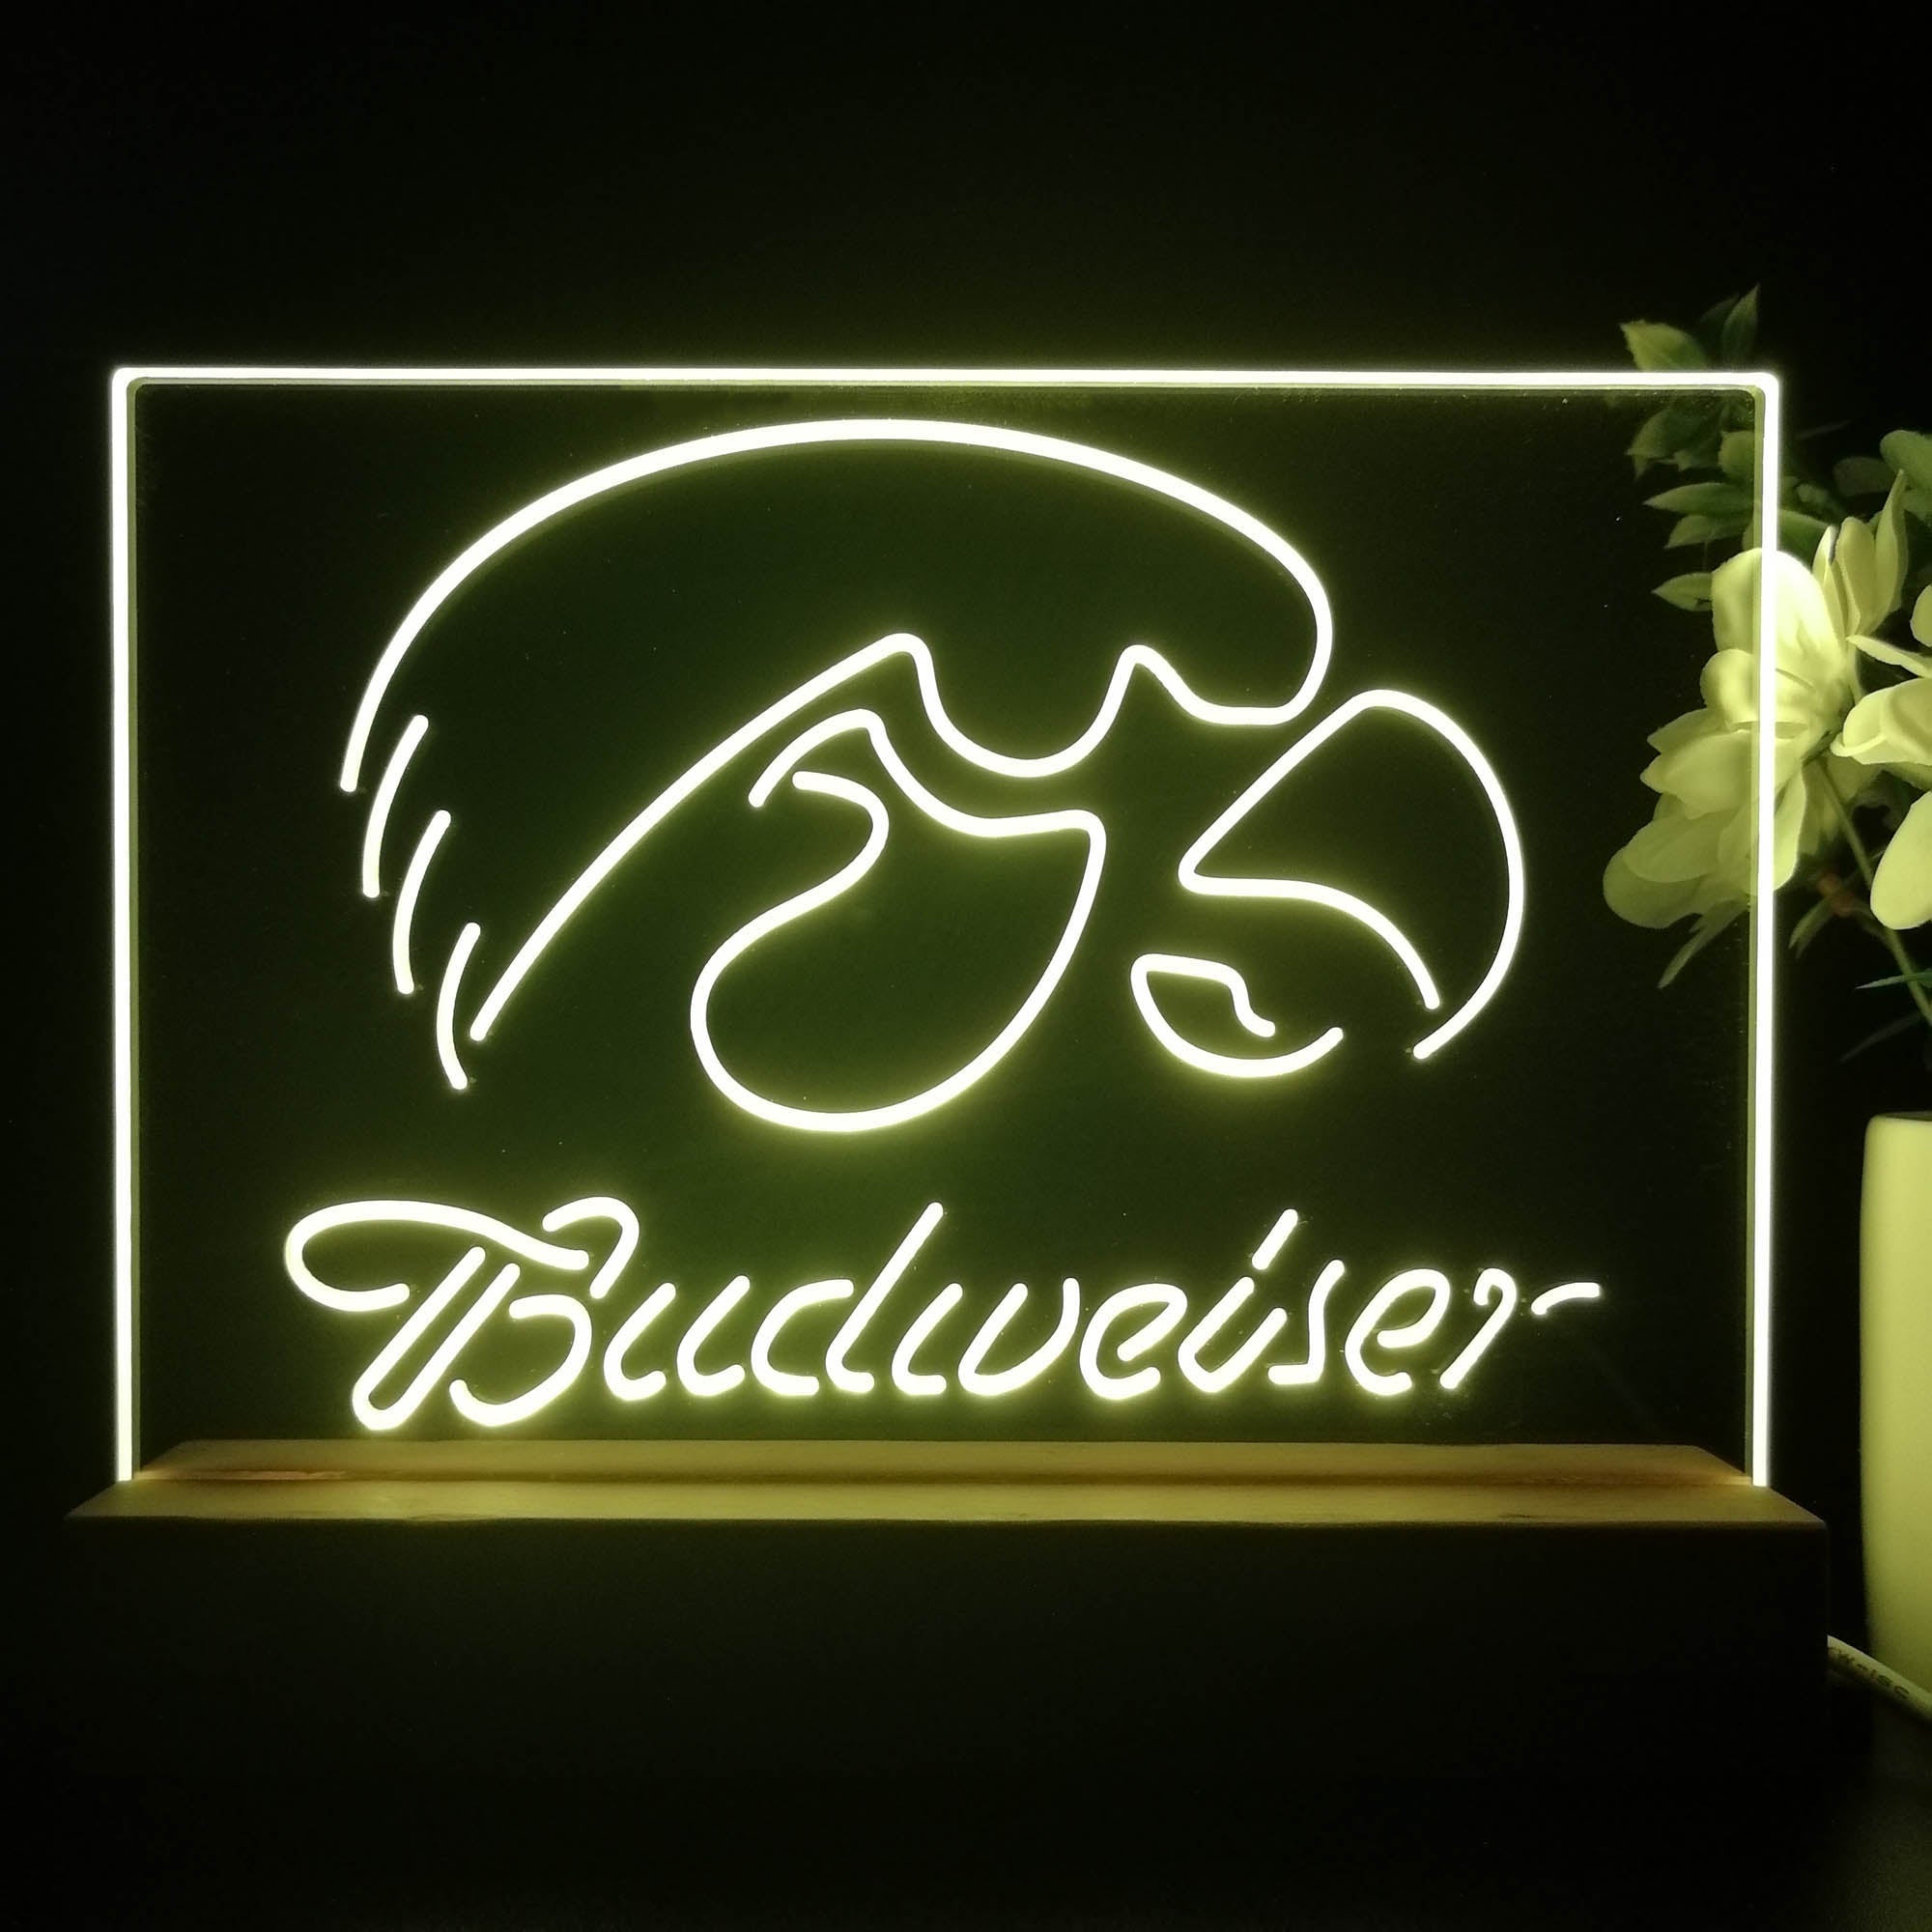 University Of Lowa Budweiser 3D Illusion Night Light Desk Lamp